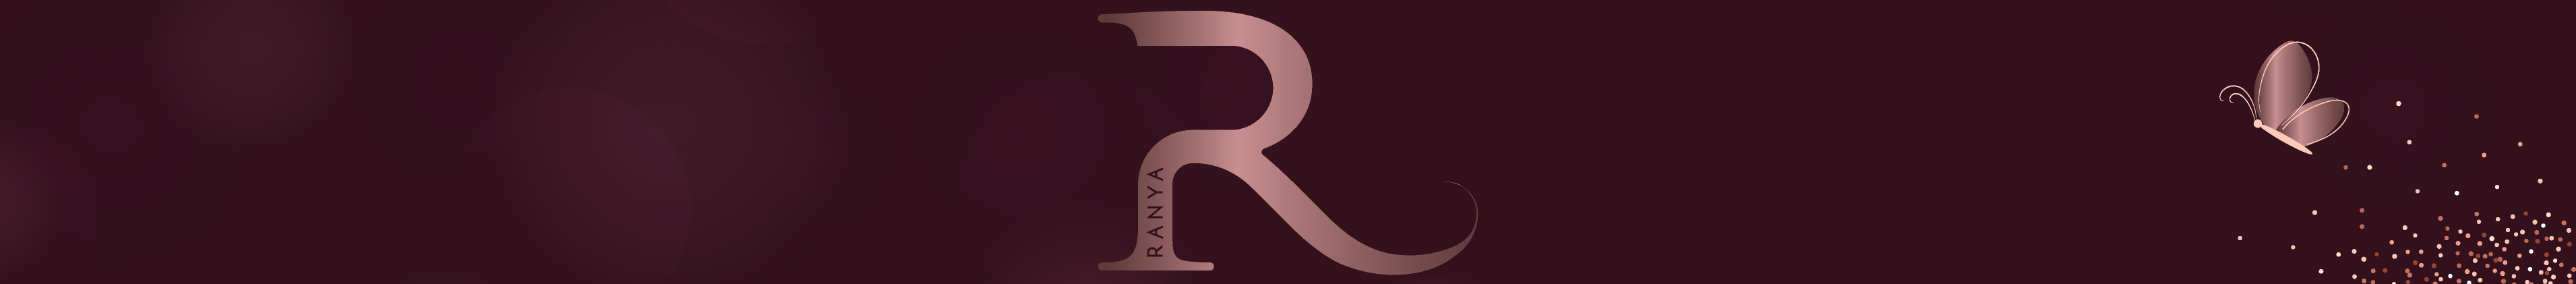 Ranya Refaat's profile banner